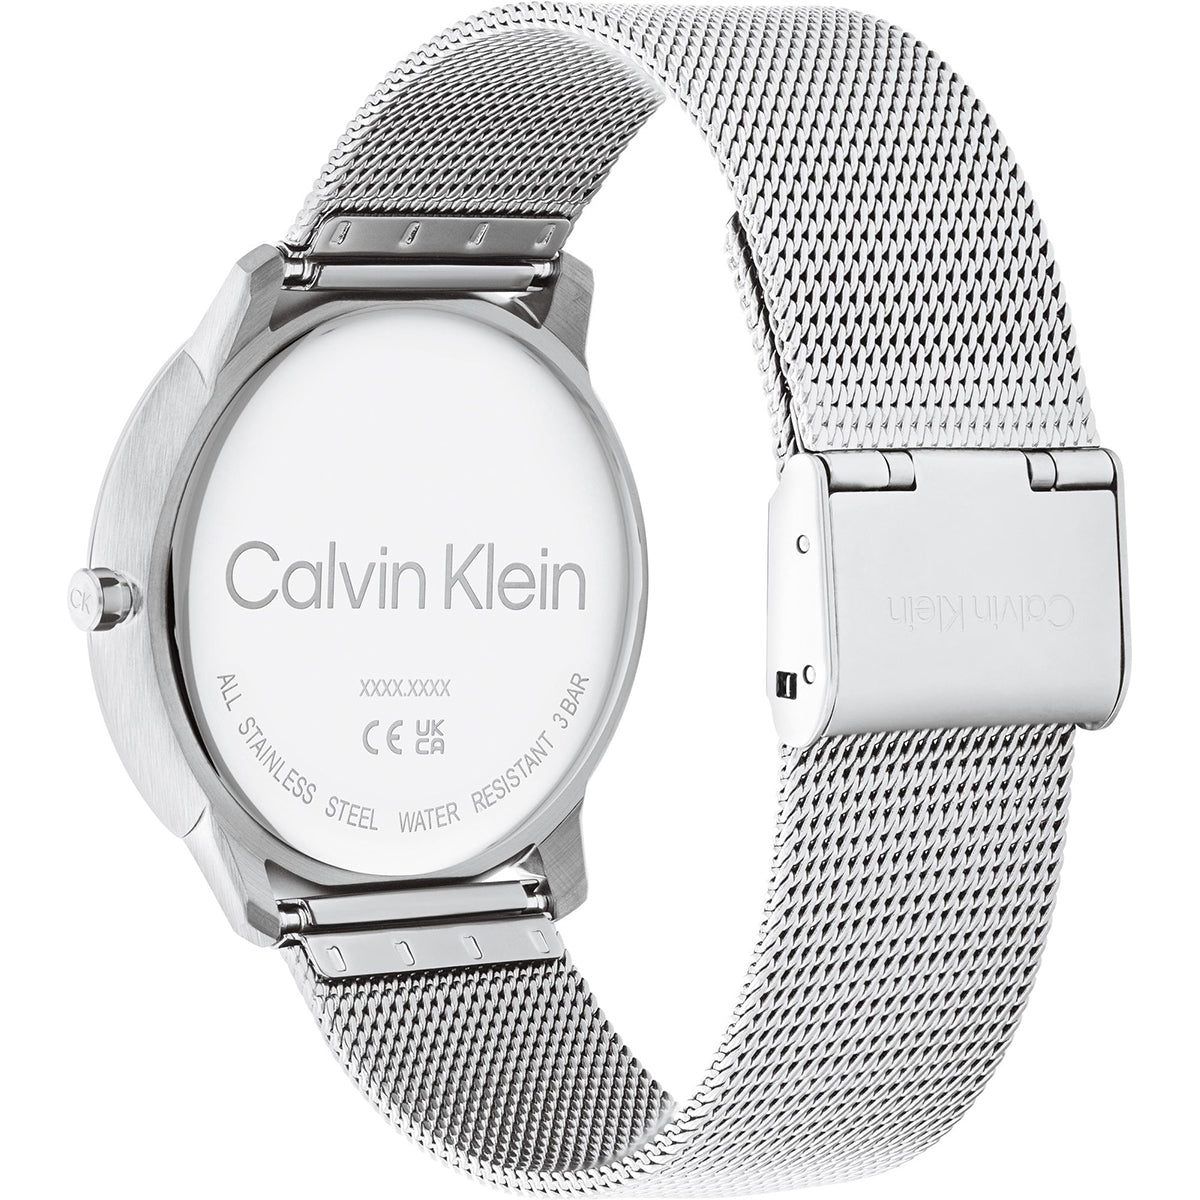 Calvin Klein - Iconic - 25200031